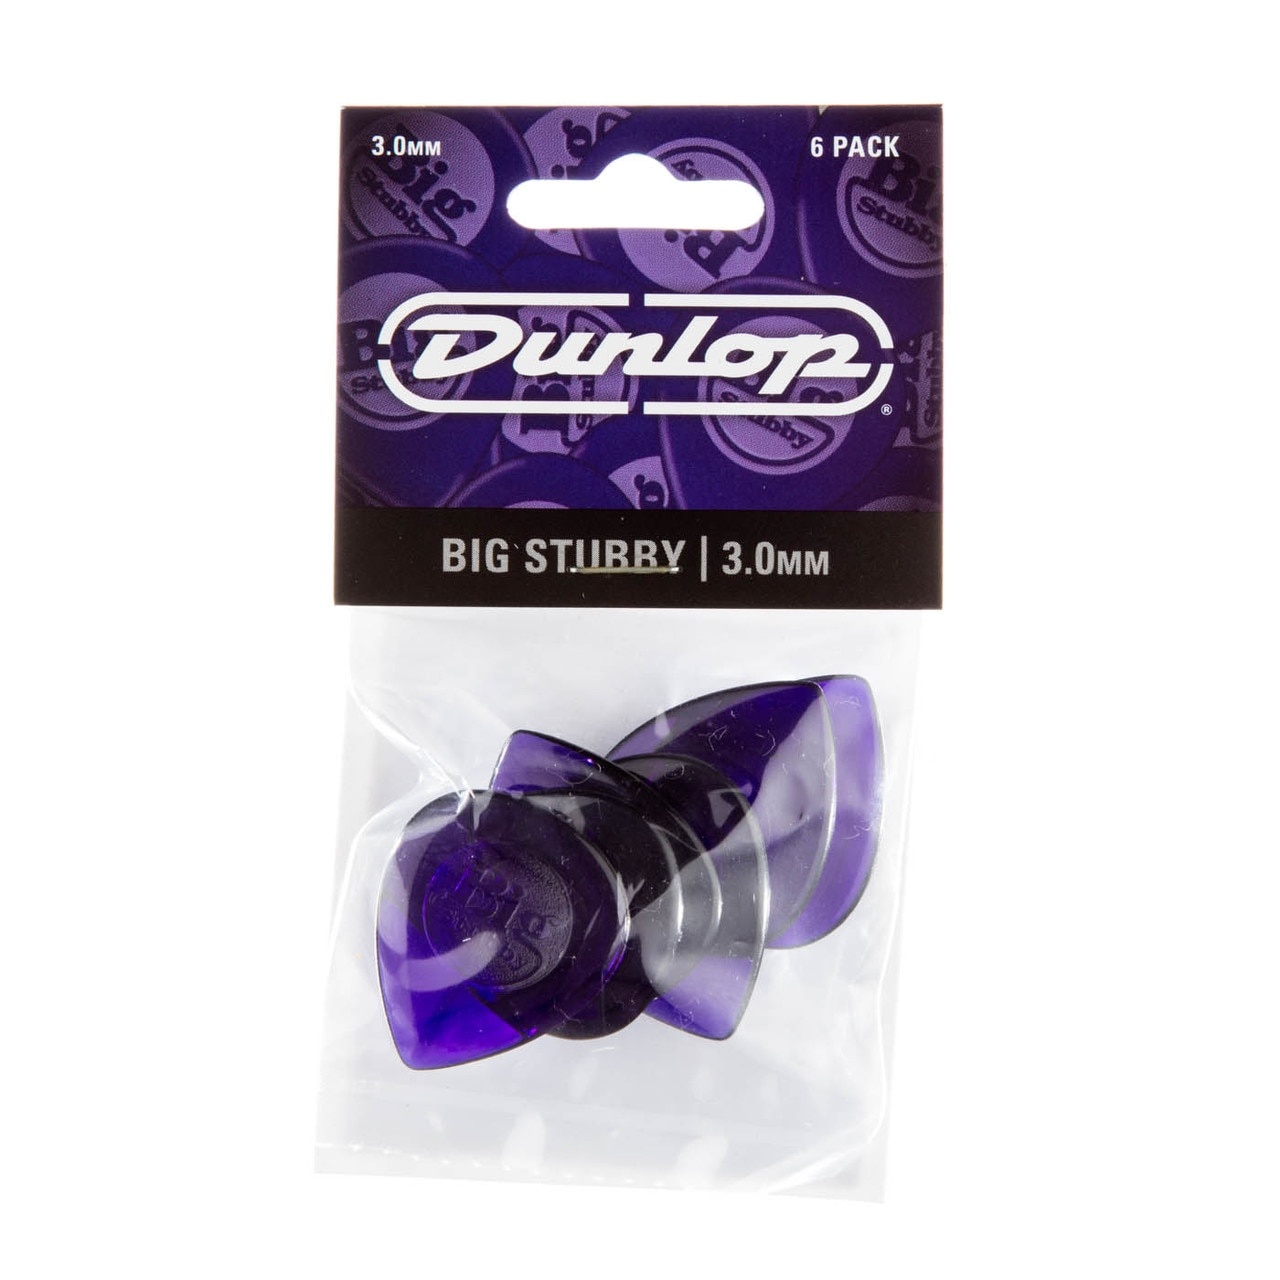 Dunlop Big Stubby Guitar Picks 3.0MM - 6 Pack (475P3.0 / Purple)